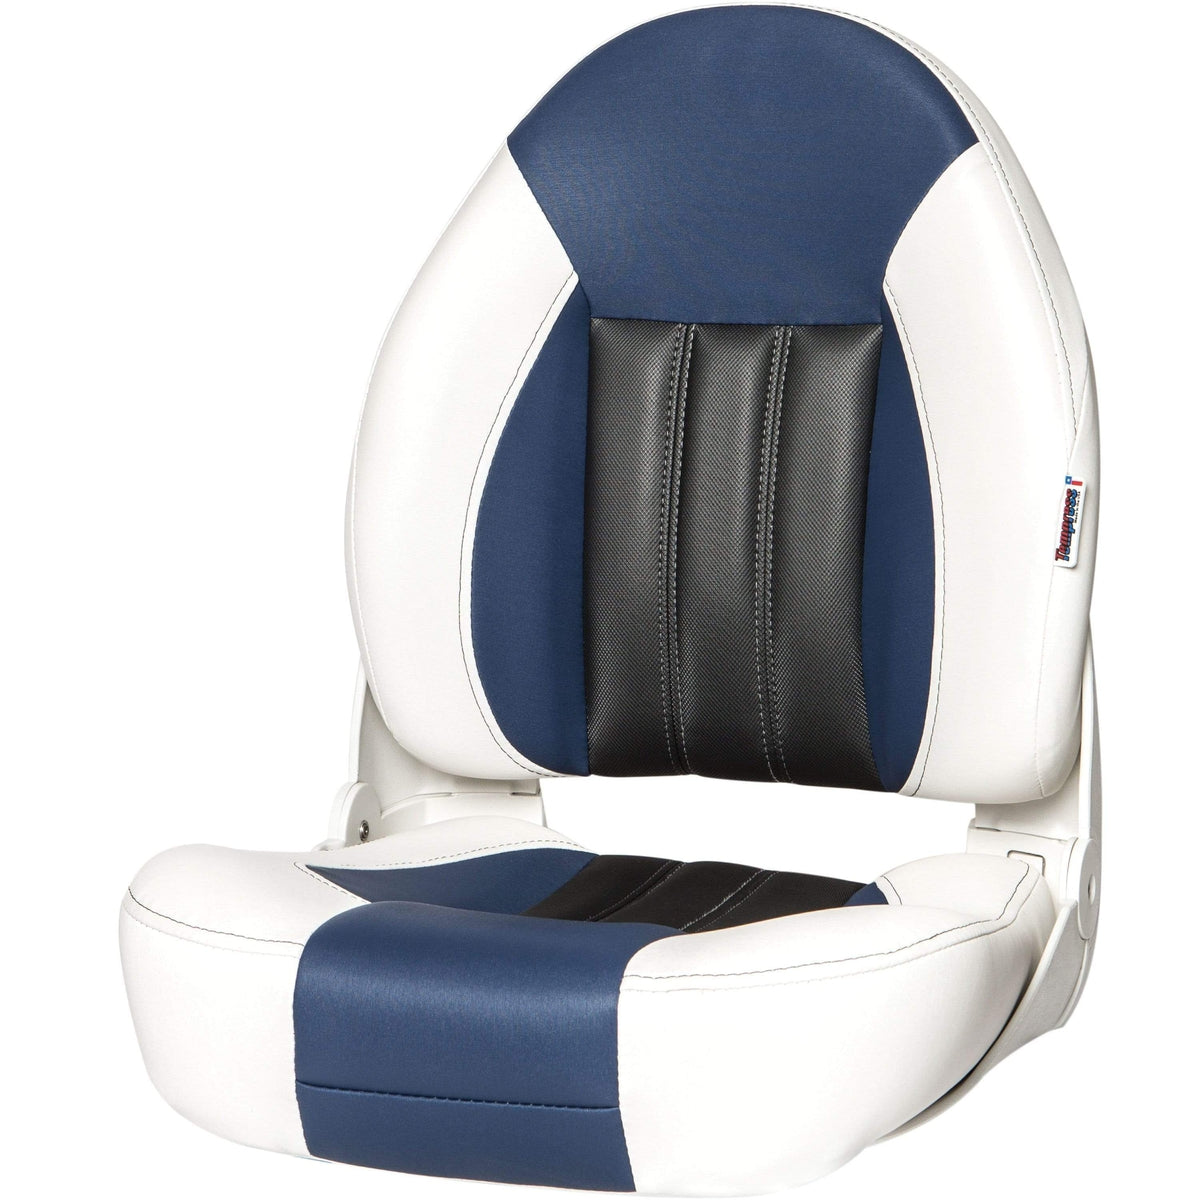 Tempress Probax High-Back Orthopedic Seat White/Blue/Carbon #68455